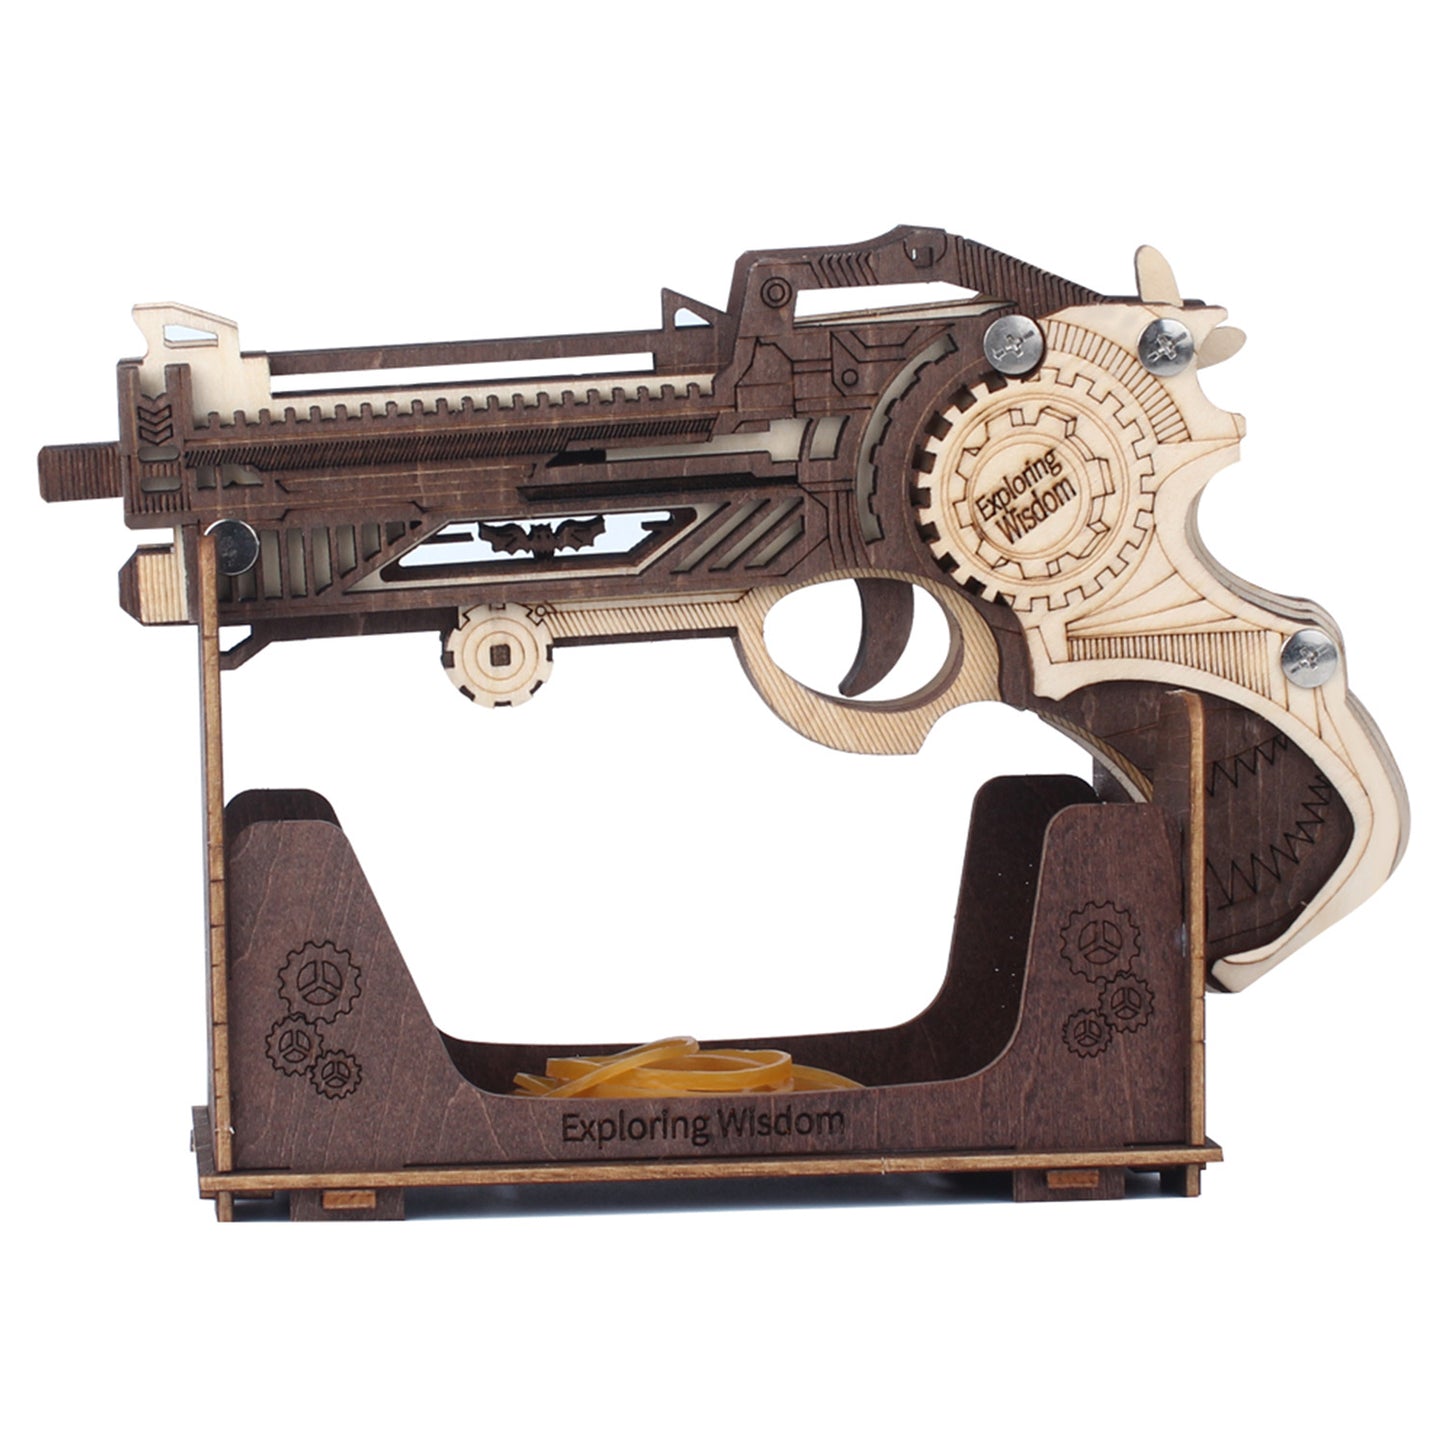 DIY 3D Speed of Light Rubber Band Gun Wooden Puzzle Kit